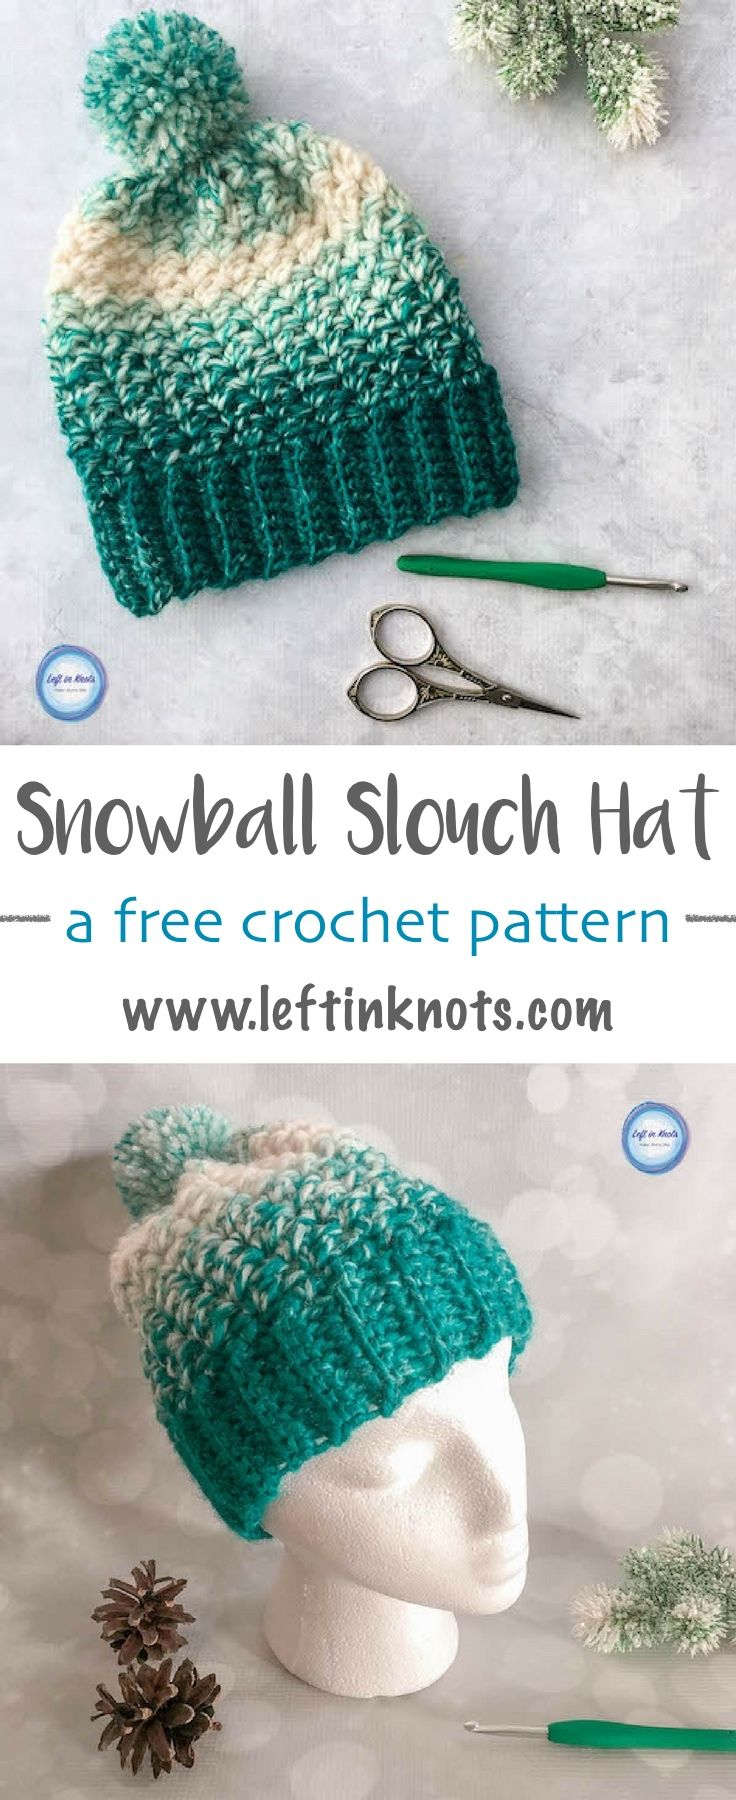 Lion Brand Free Crochet Patterns Crochet Snowball Slouch Hat Free One Skein Pattern Left In Knots